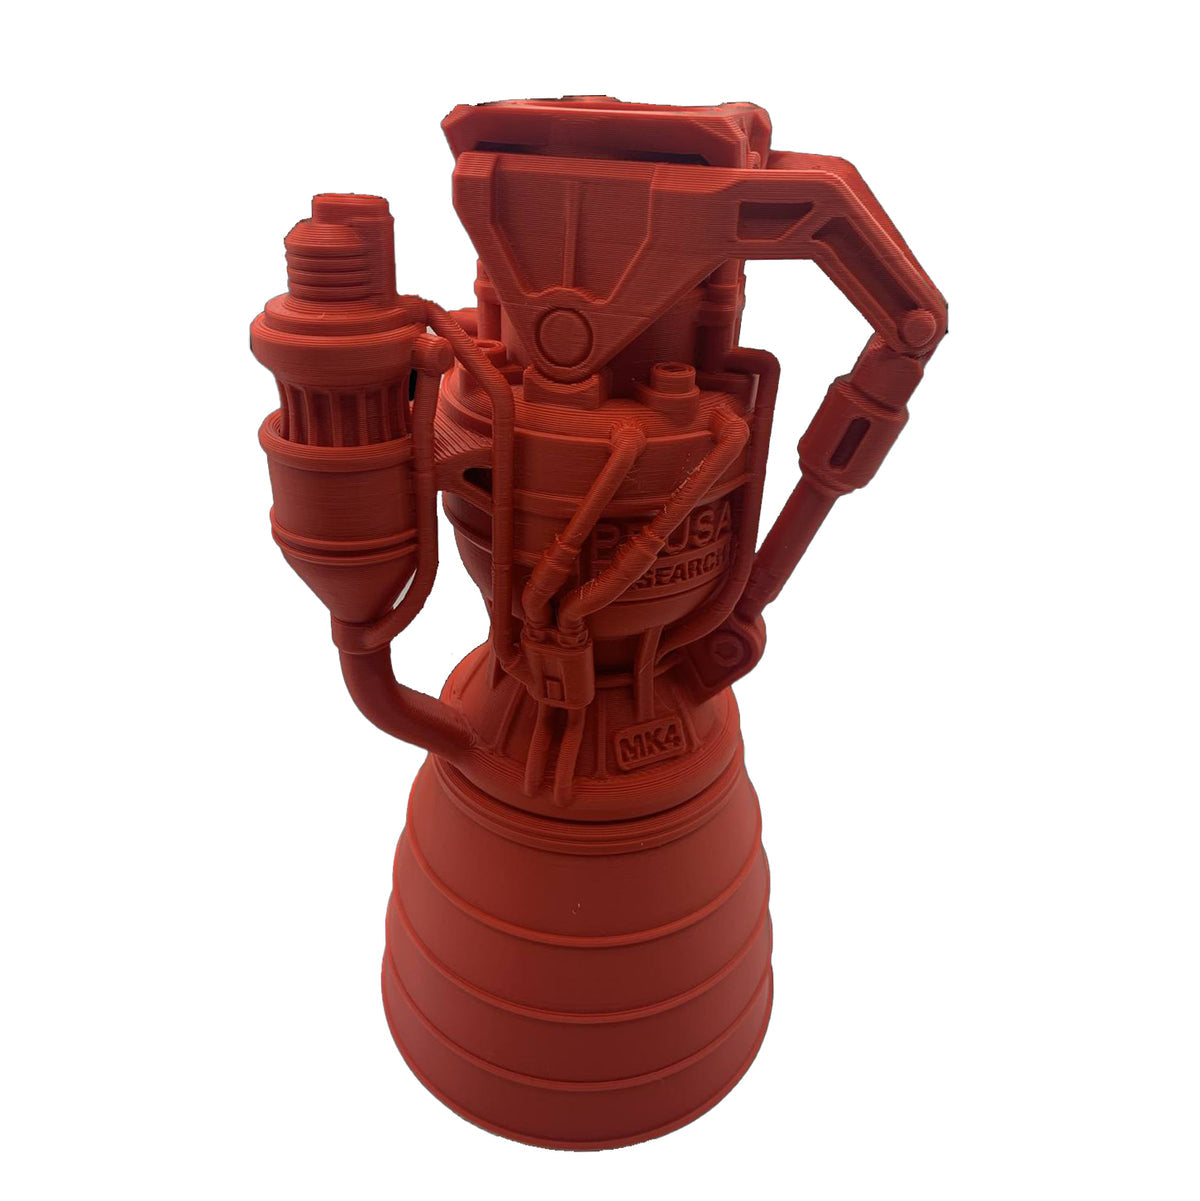 PLA 3D Printing Filament 1.75mm Starter Pack Box (6 x 1KG)